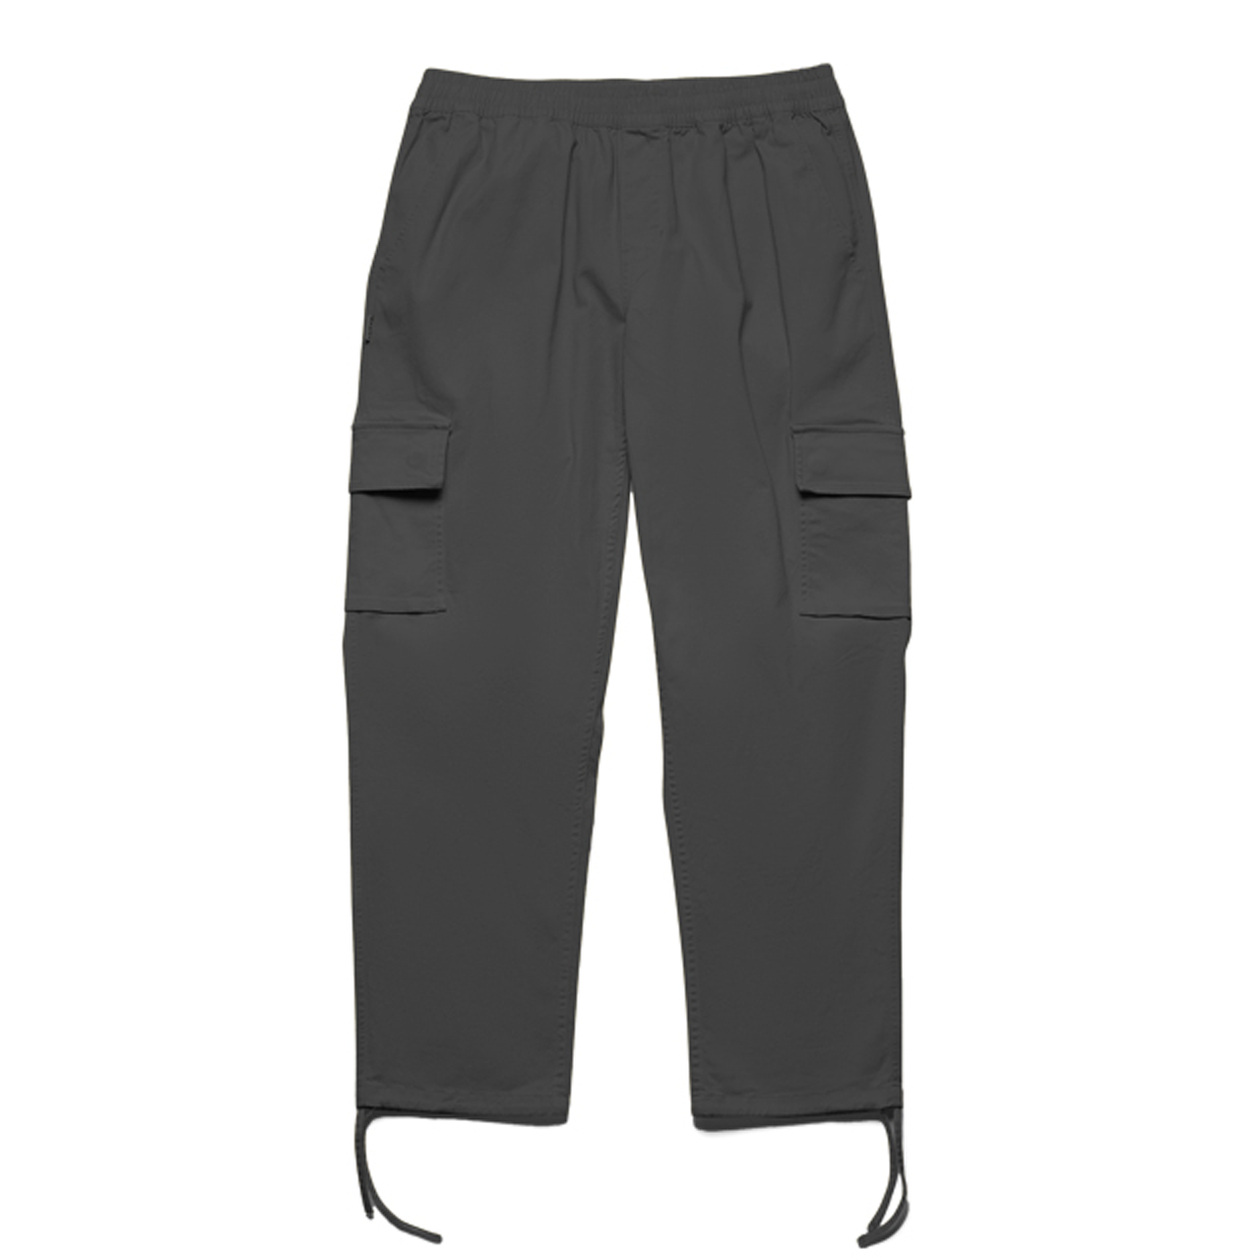 Plus Size Camo Print Cargo Pants With Side Pockets Mid Waist